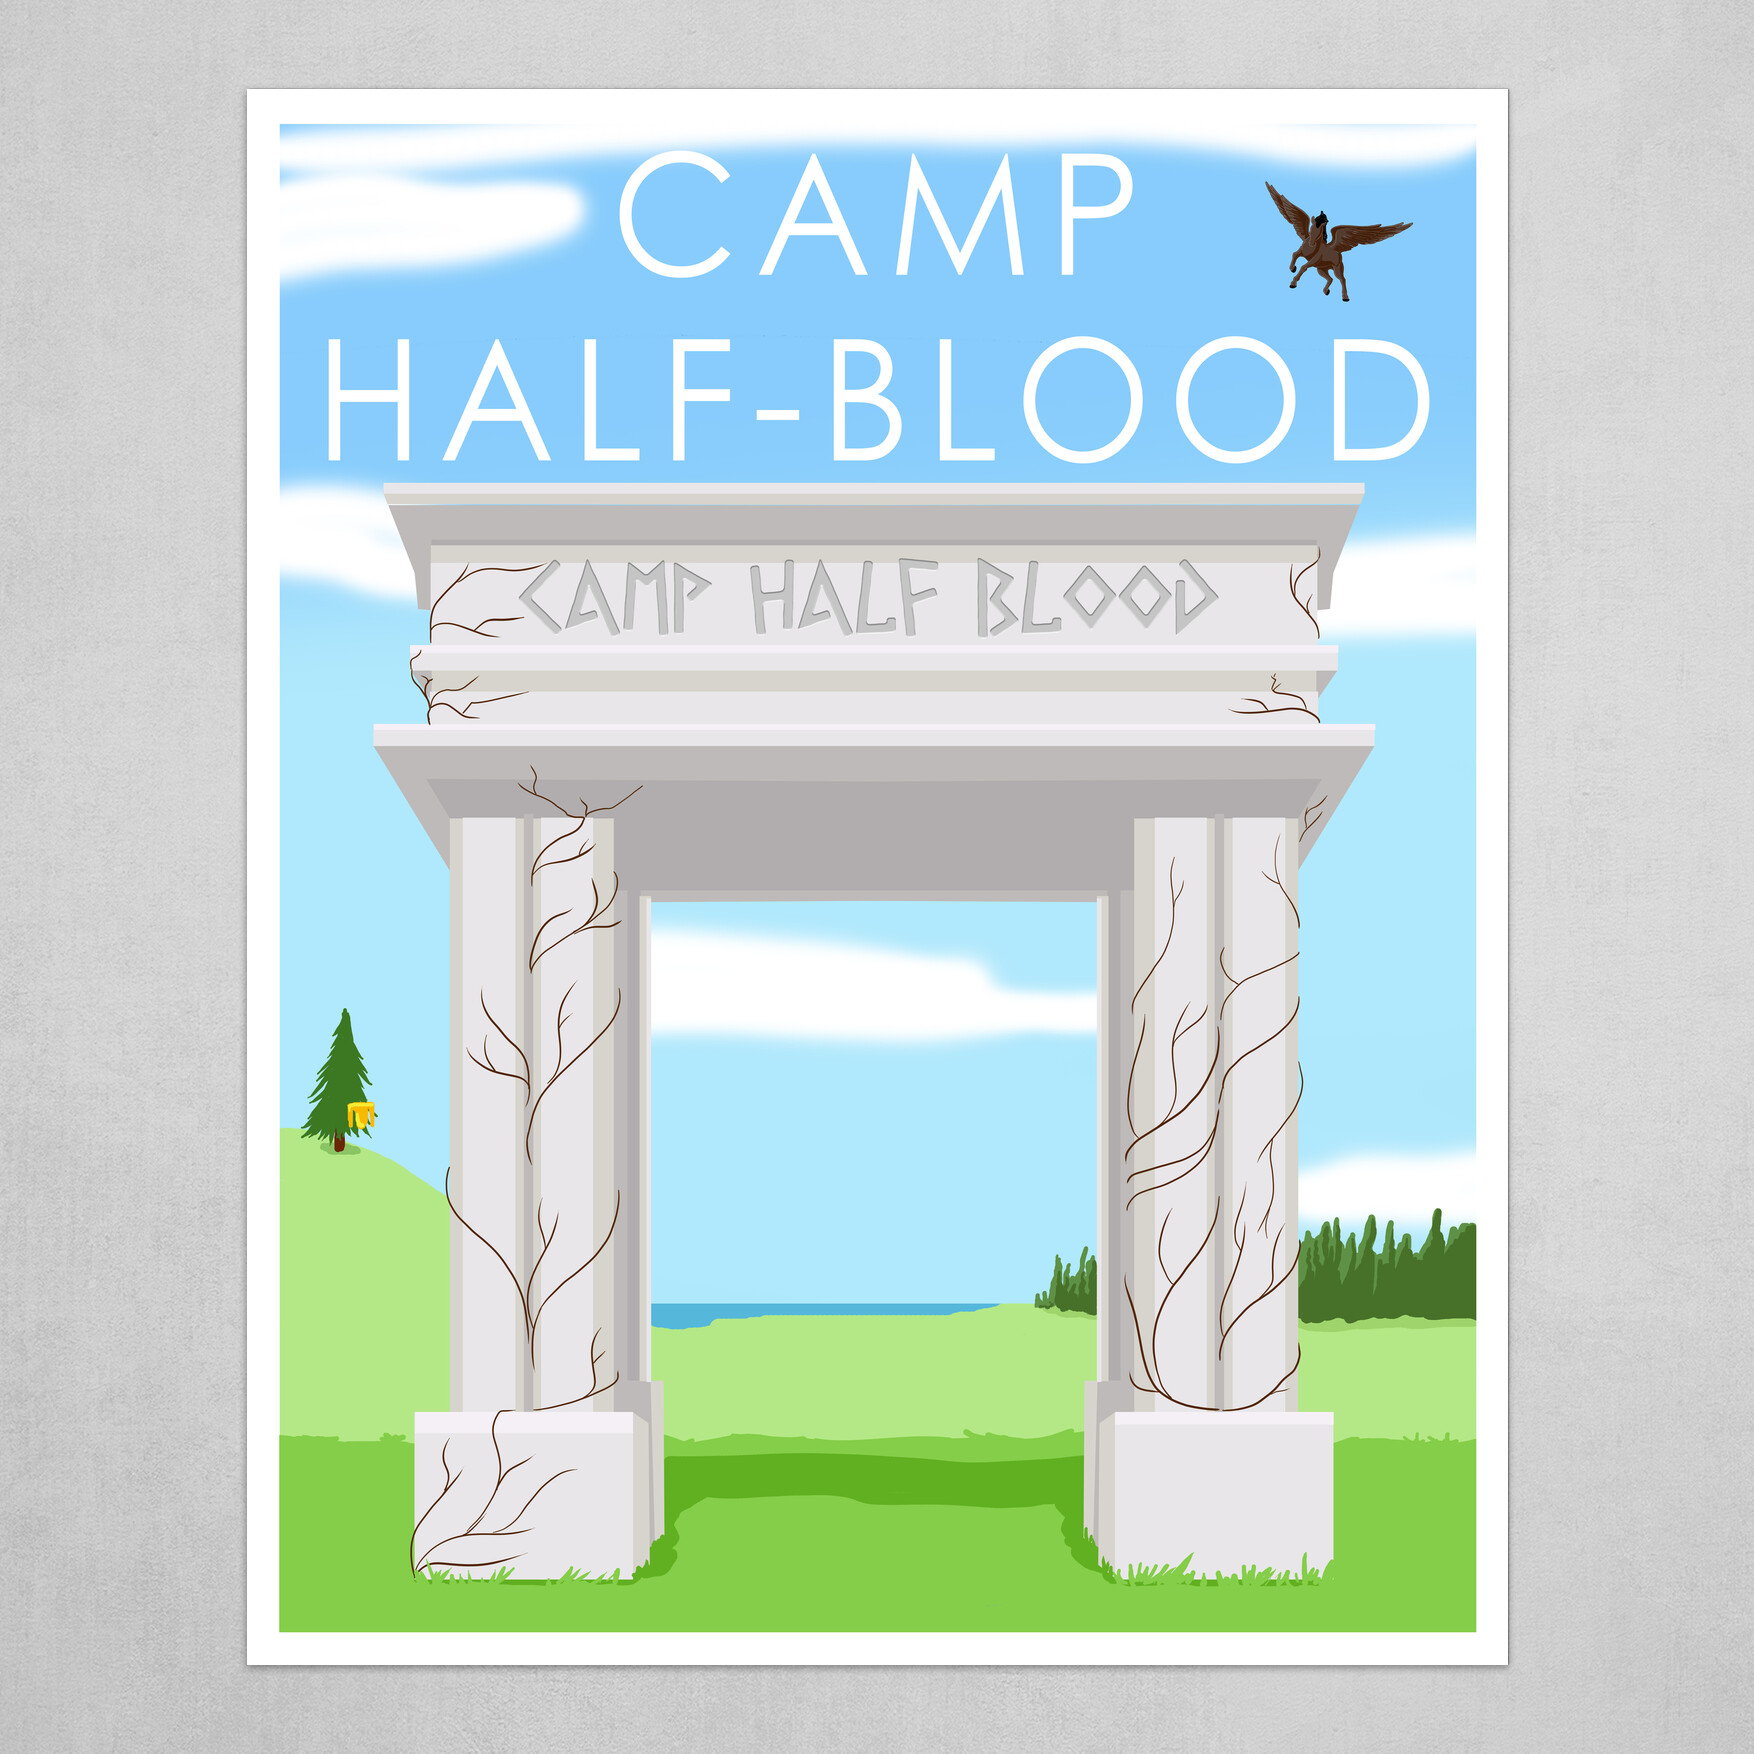 Camp Half-blood | Photographic Print